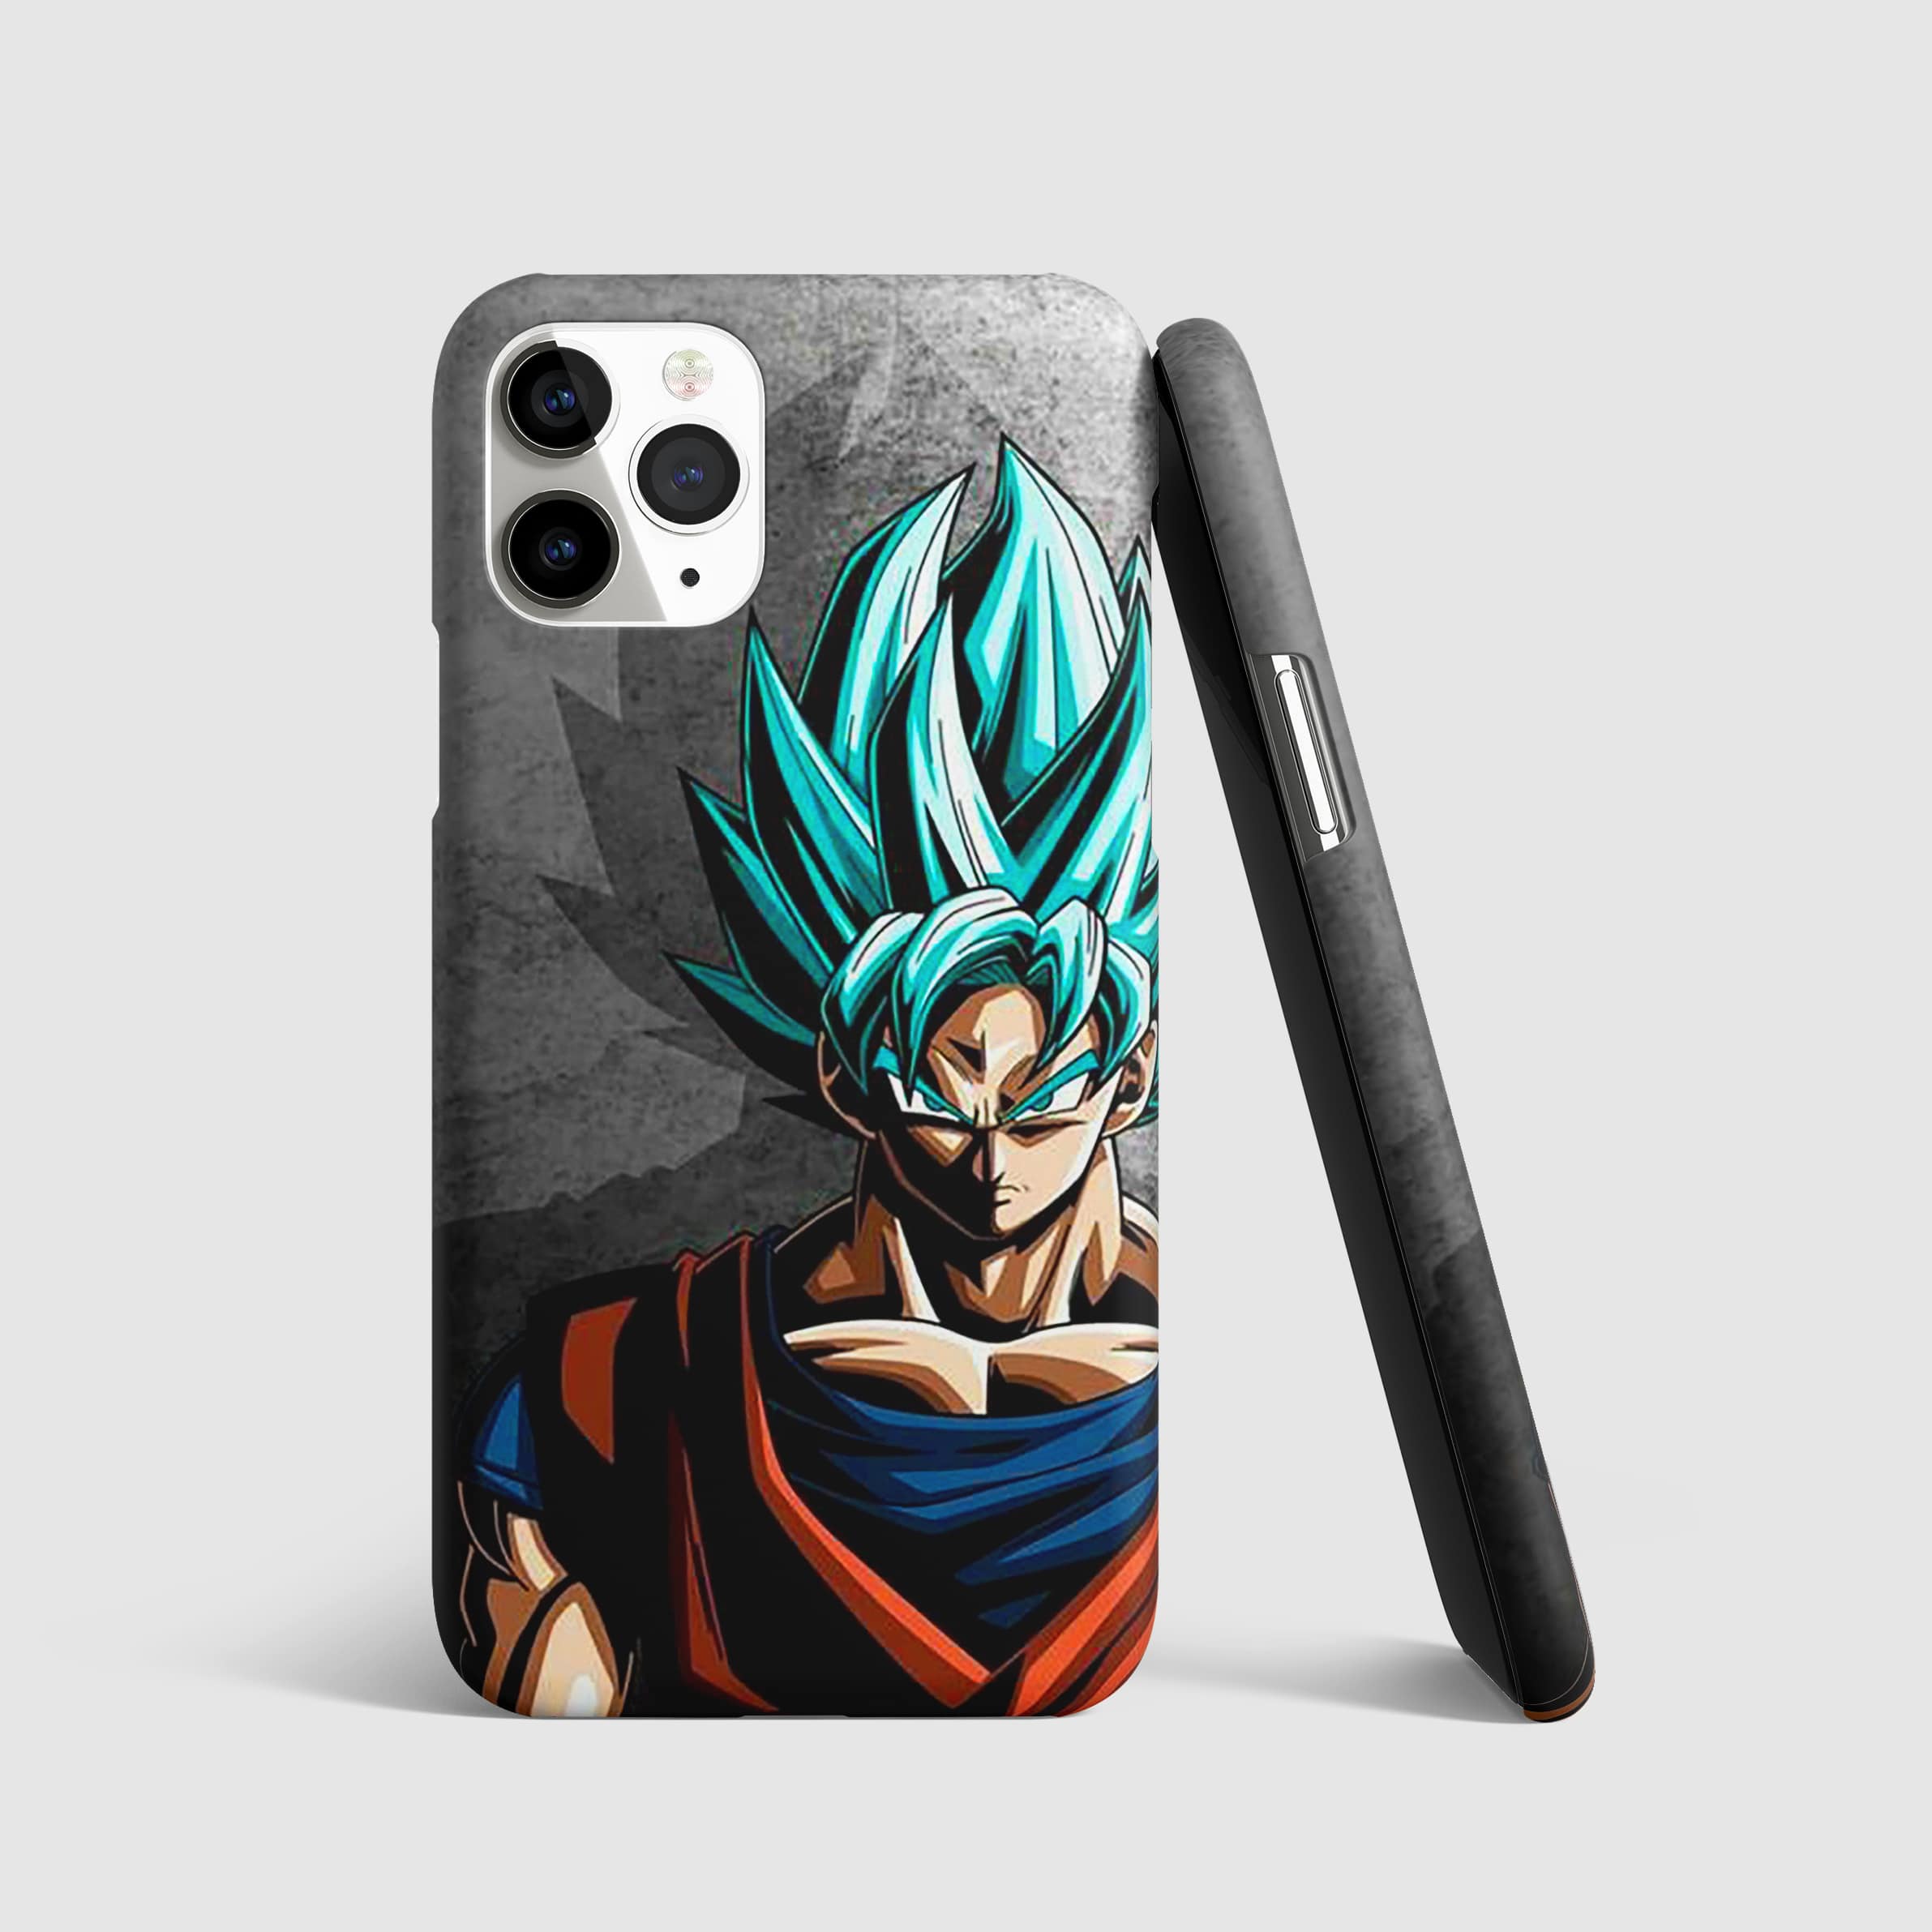 Goku in Super Saiyan form on a dynamic phone cover.